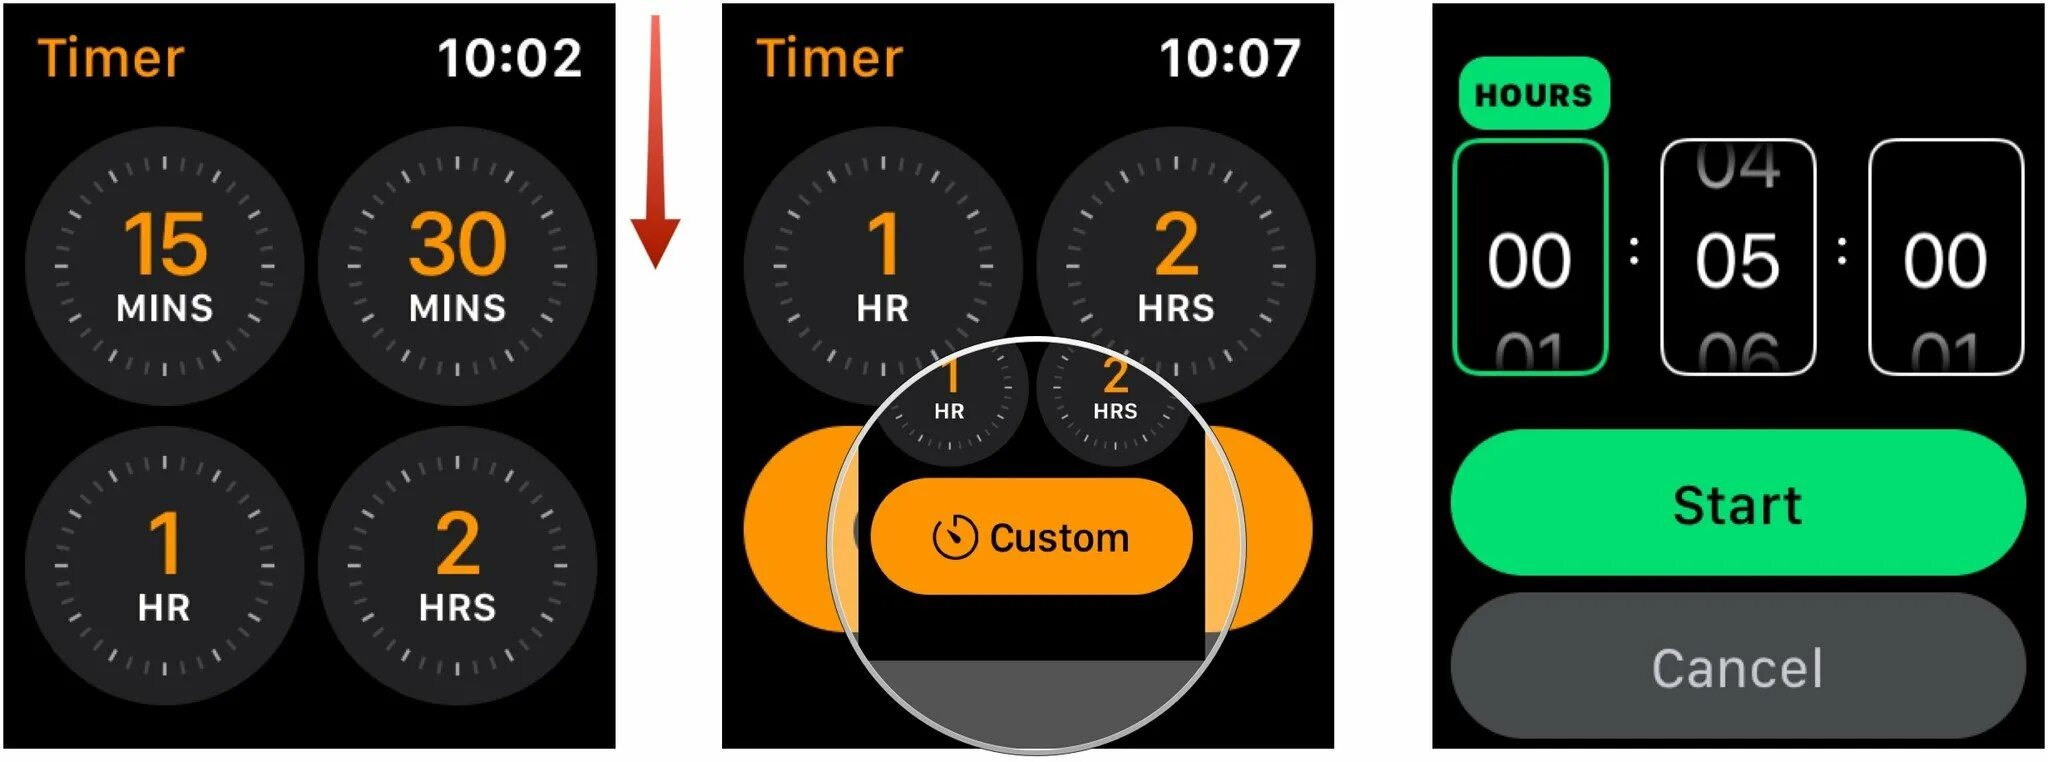 Поставь таймер на час 1 минуту. Эппл вотч таймер. Установить таймер. Таймер приложение. Иконка таймер на Apple watch.